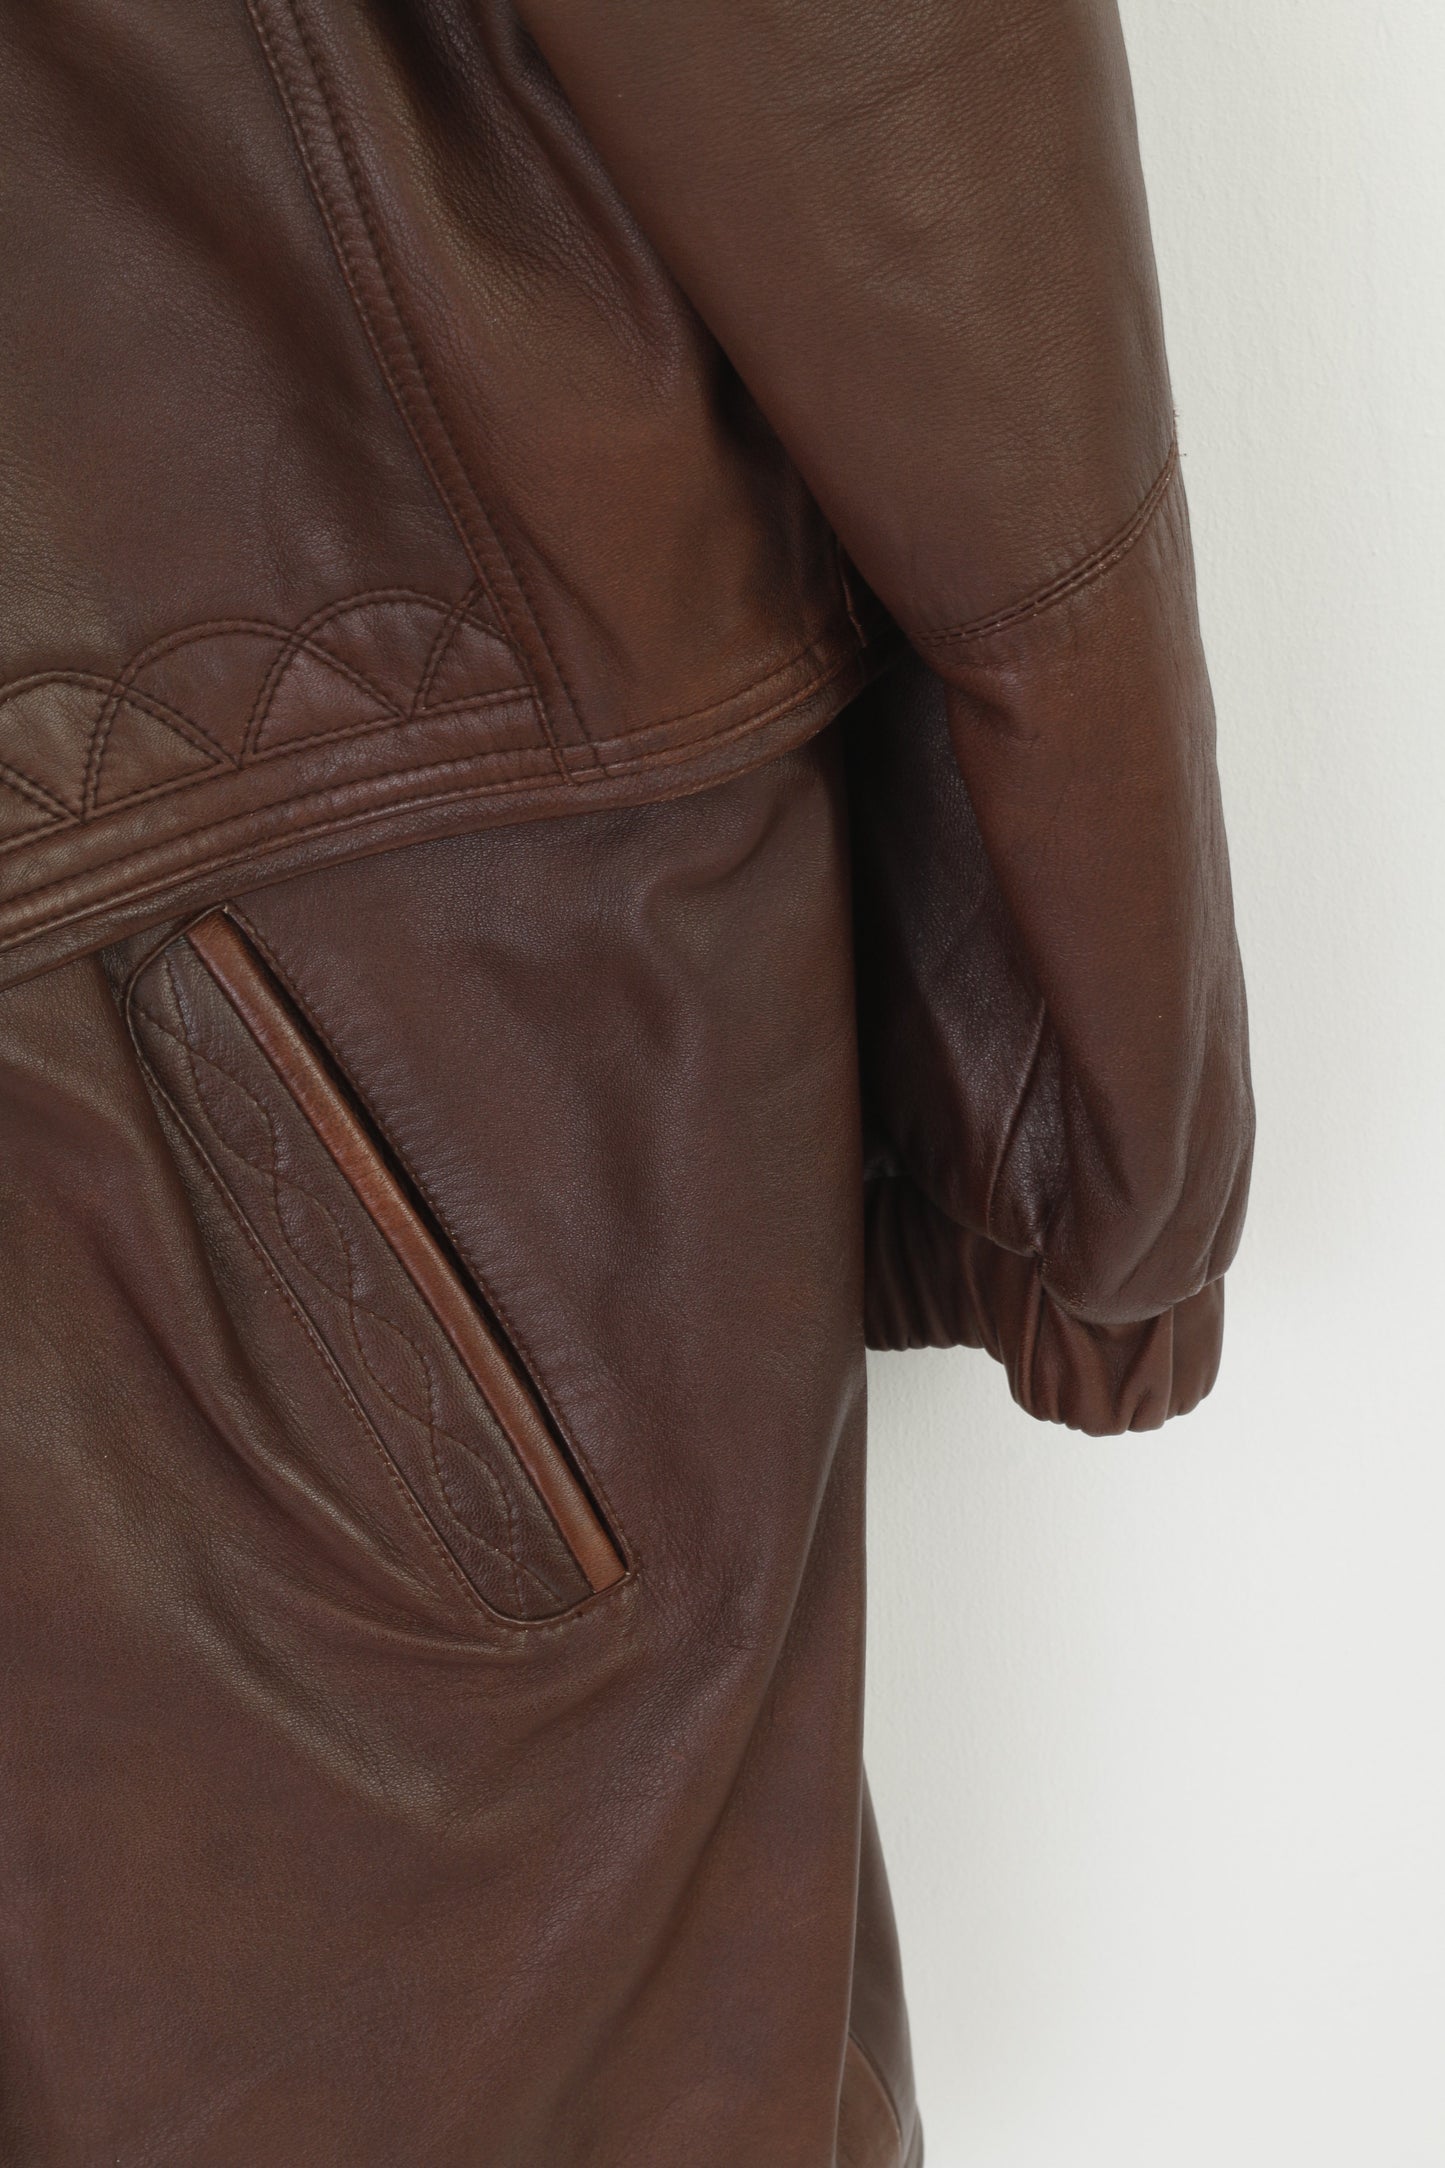 C&A Your 6th Sense Women 14 40 Jacket Brown Leather Full Zipper Vintage Retro Top